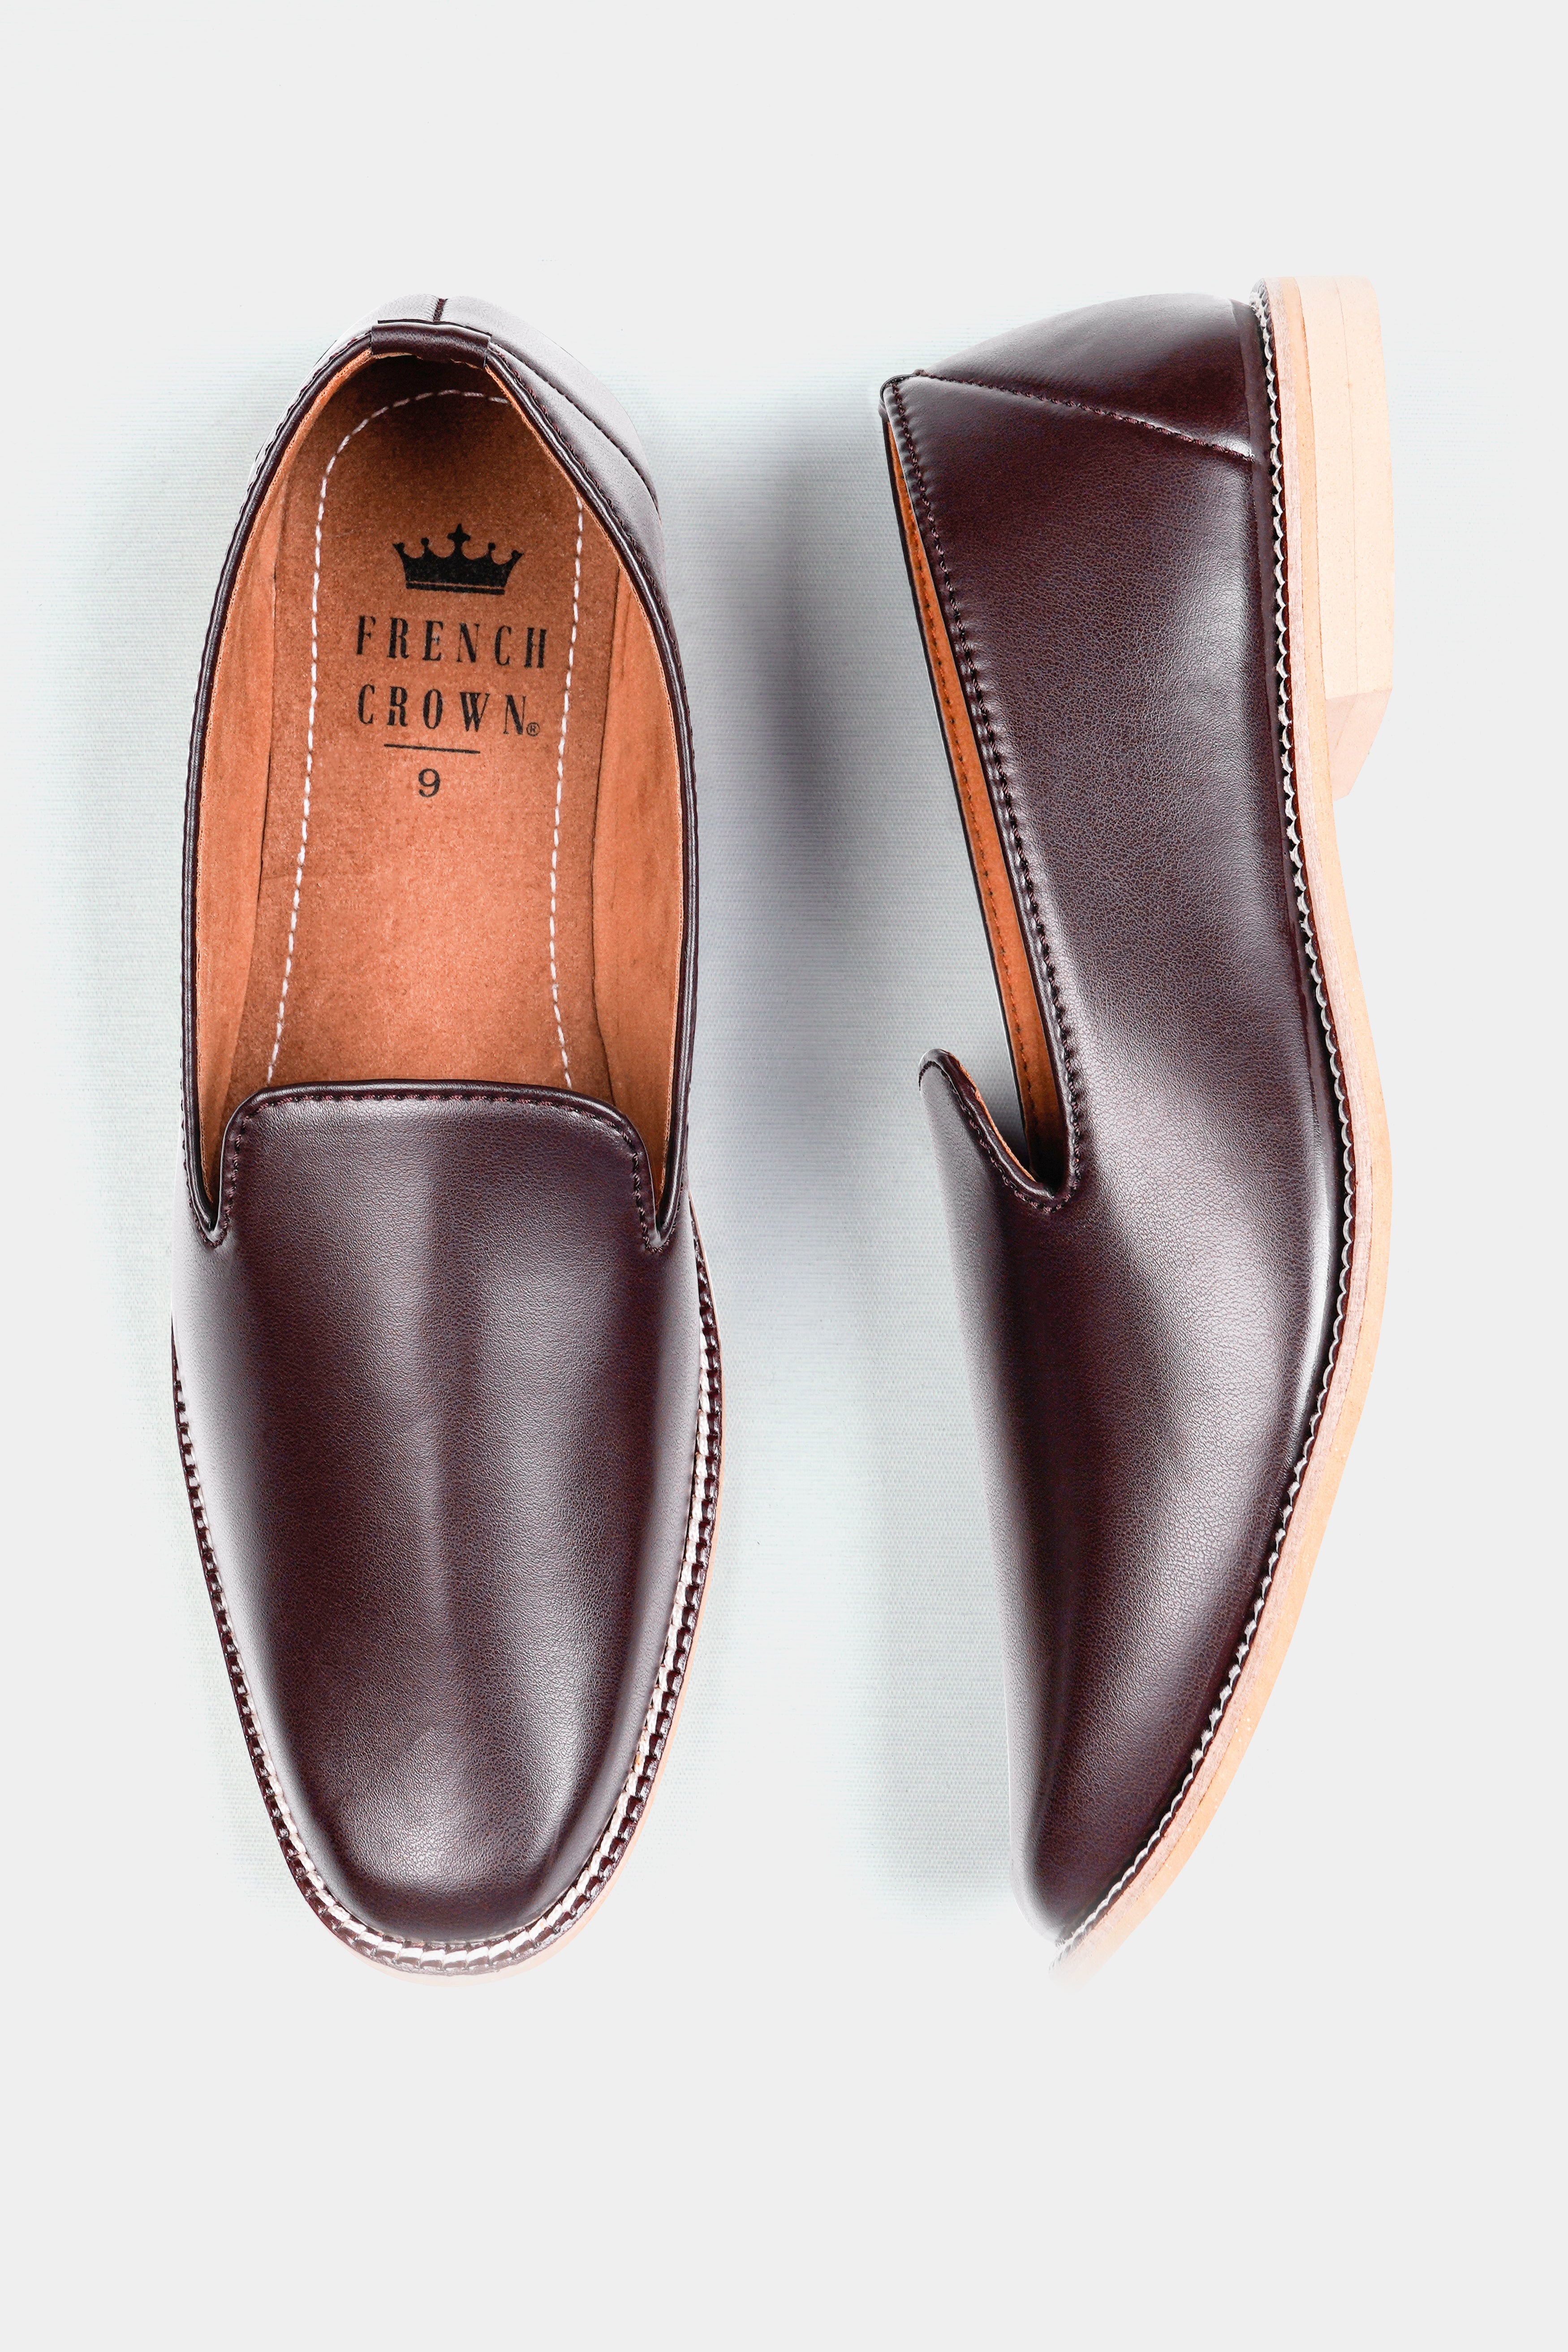 Dark Brown Vegan Leather Hand Stitched Mojri Slip-On Shoes FT146-6, FT146-7, FT146-8, FT146-9, FT146-10, FT146-11